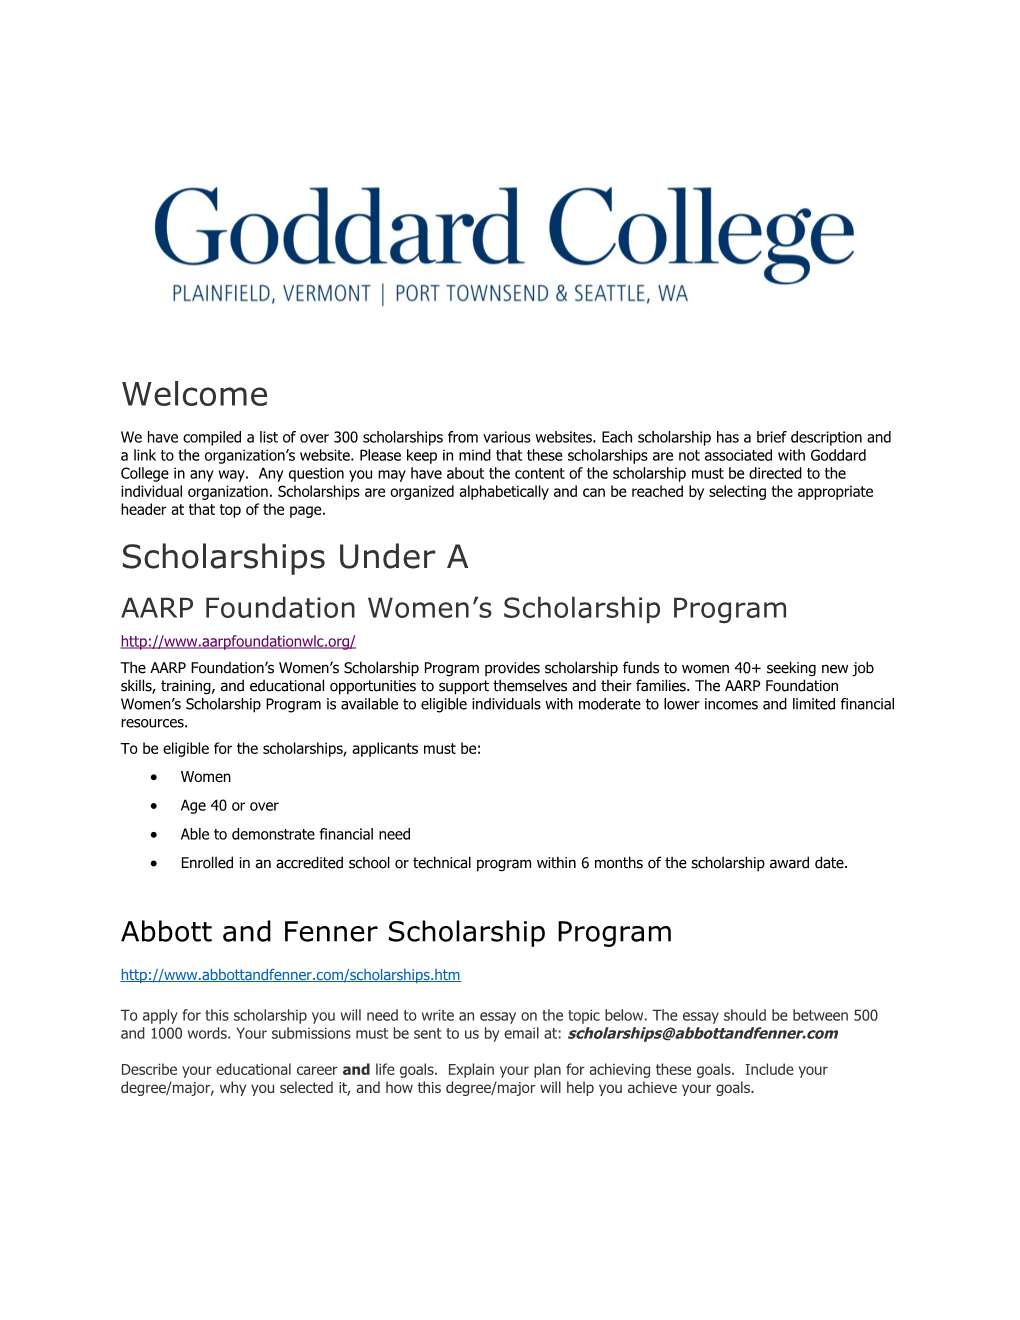 AARP Foundation Women S Scholarship Program